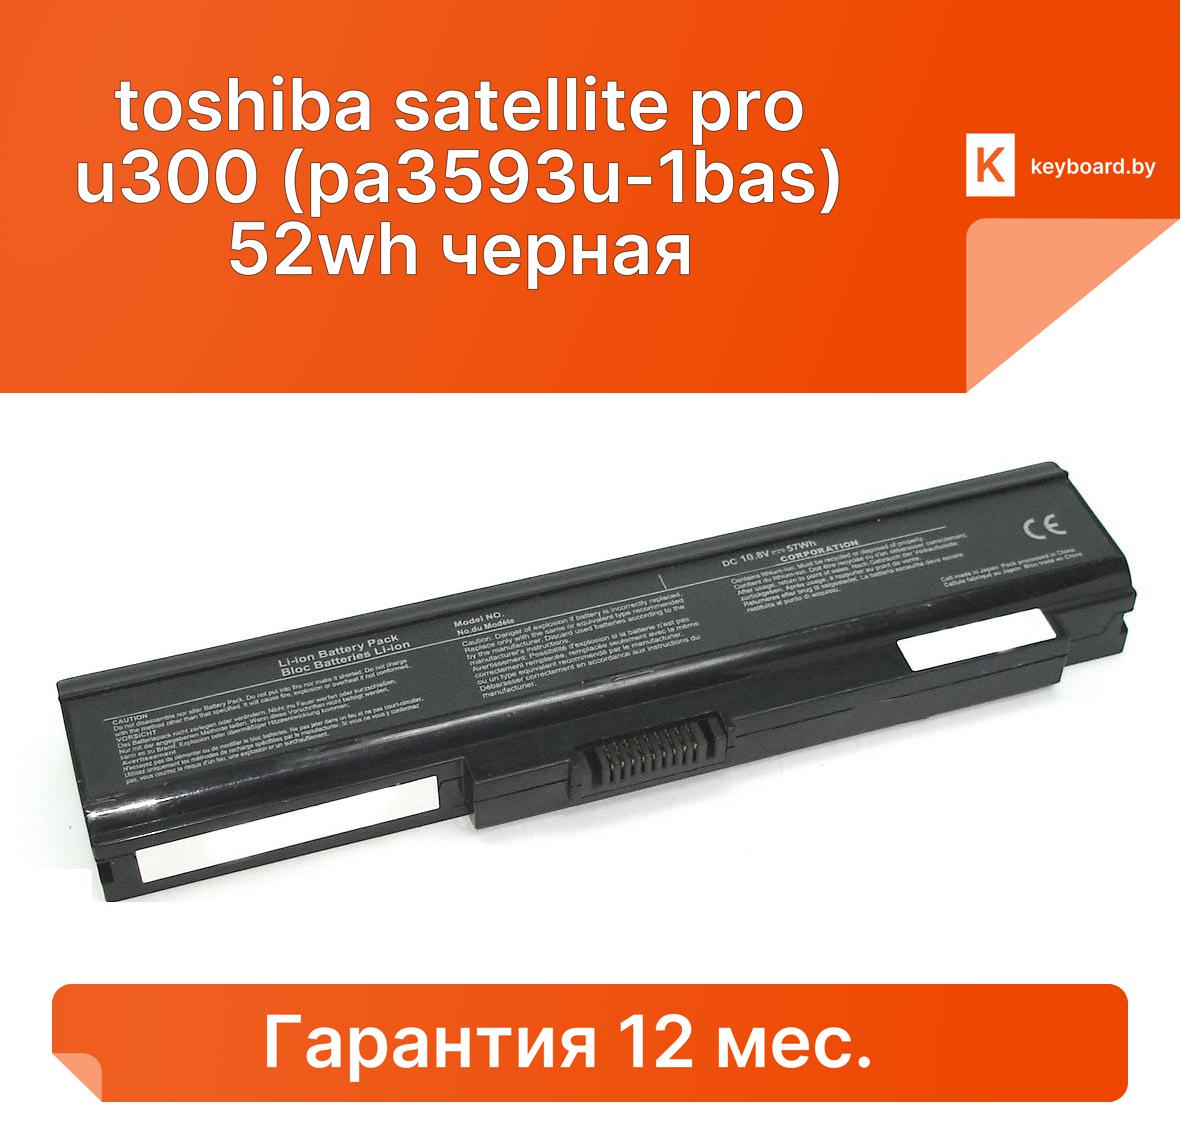 Аккумуляторная батарея для ноутбука toshiba satellite pro u300 (pa3593u-1bas) 52wh черная